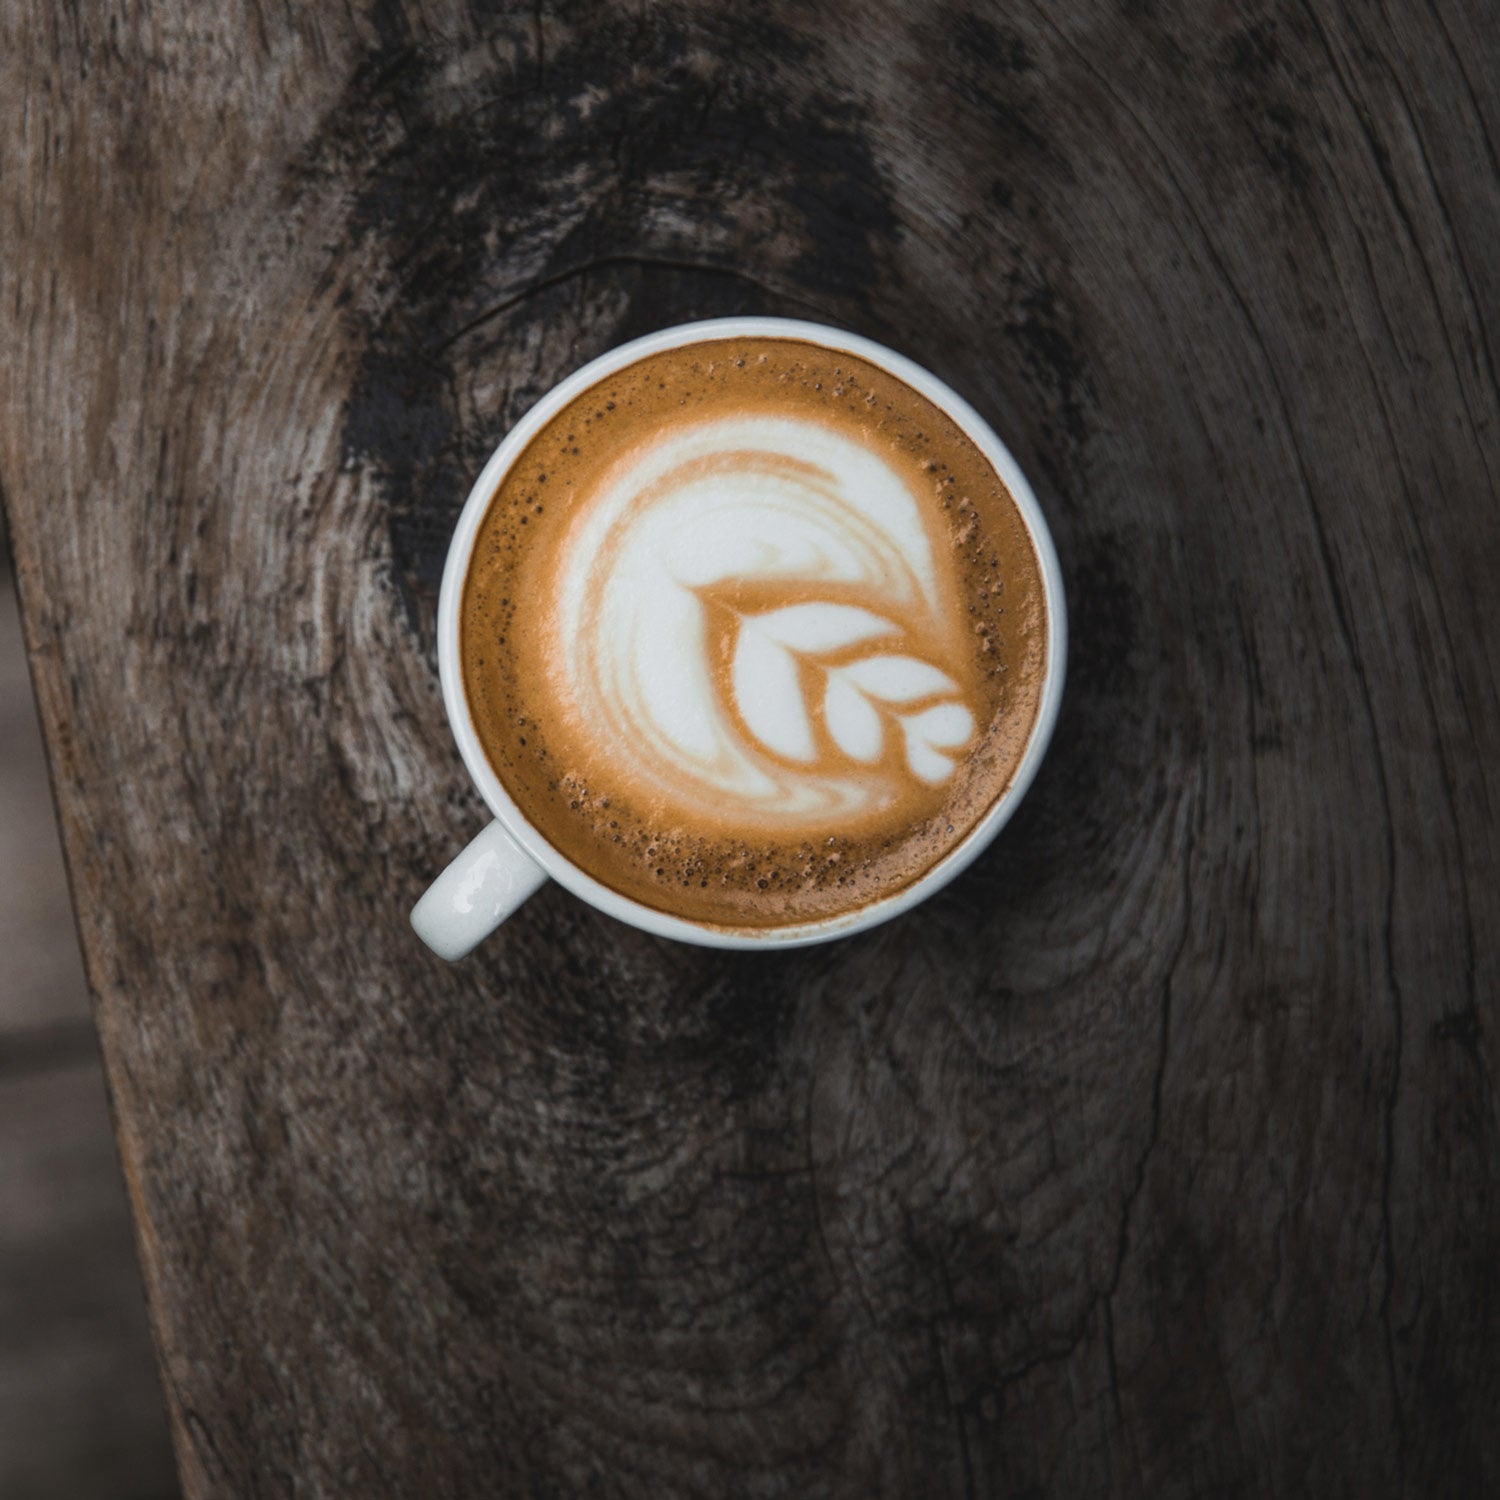 Få de bedste råd om kaffe fra kaffe eksperten hos Copenhagen Coffee Dealers og få en god kaffeoplevelse